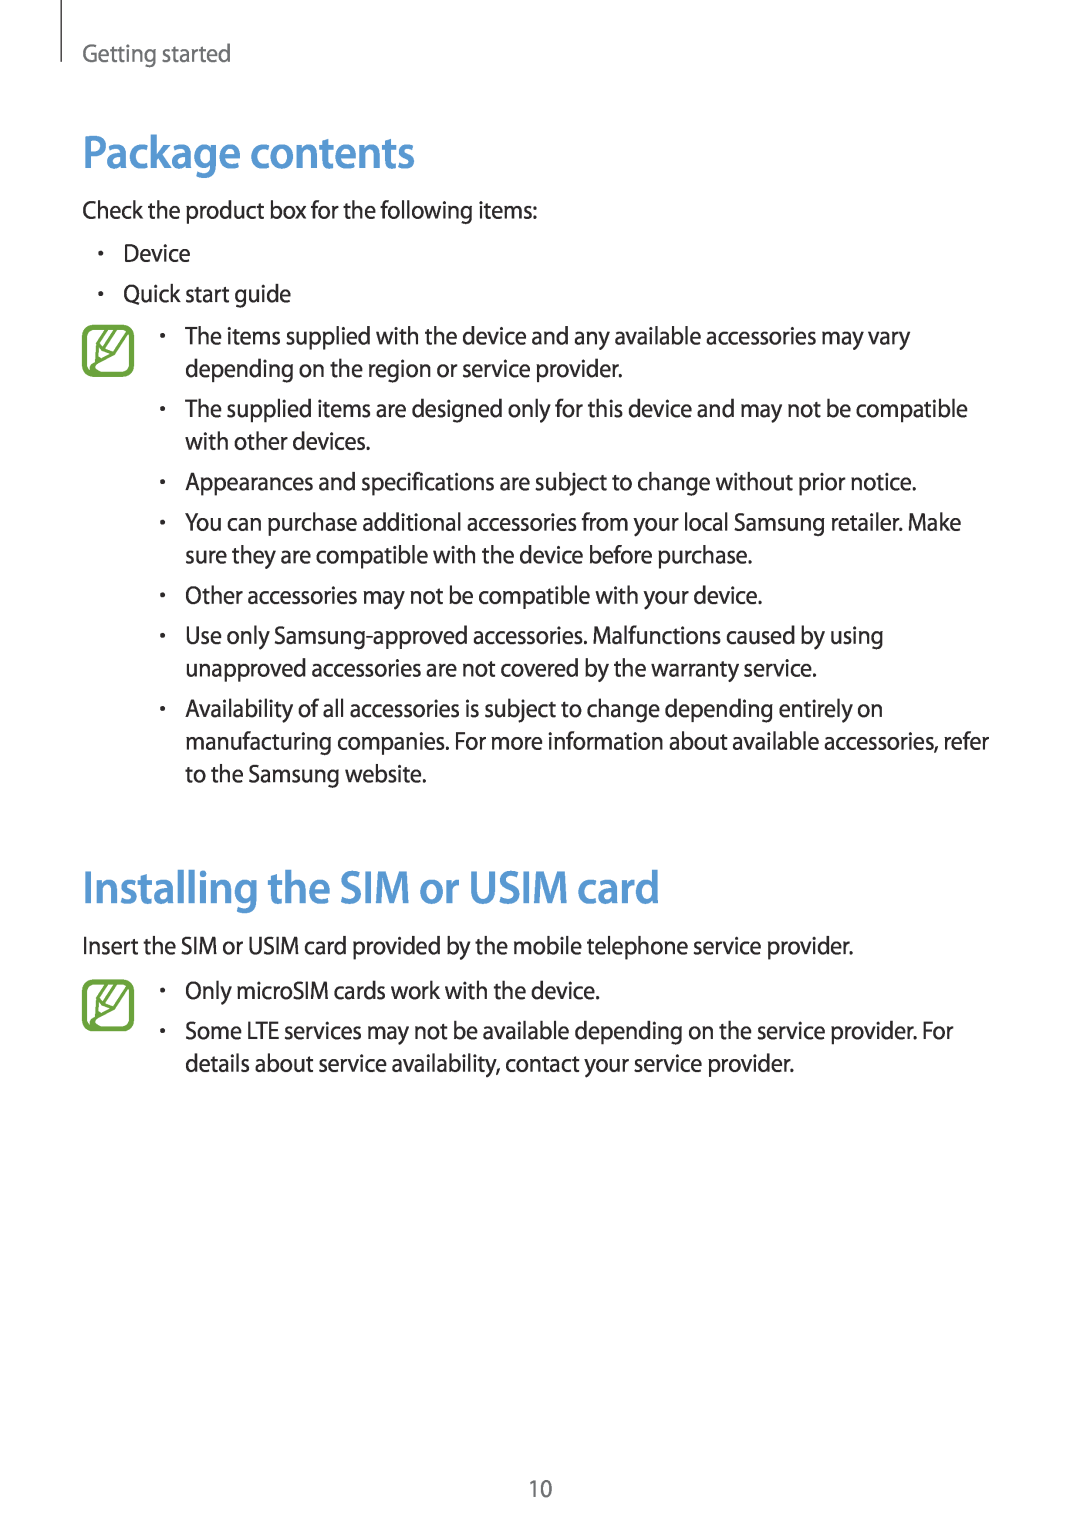 Samsung SM-T3150MKACRO, SM-T3150ZWAVD2, SM-T3150ZWADBT Package contents, Installing the SIM or USIM card, Getting started 